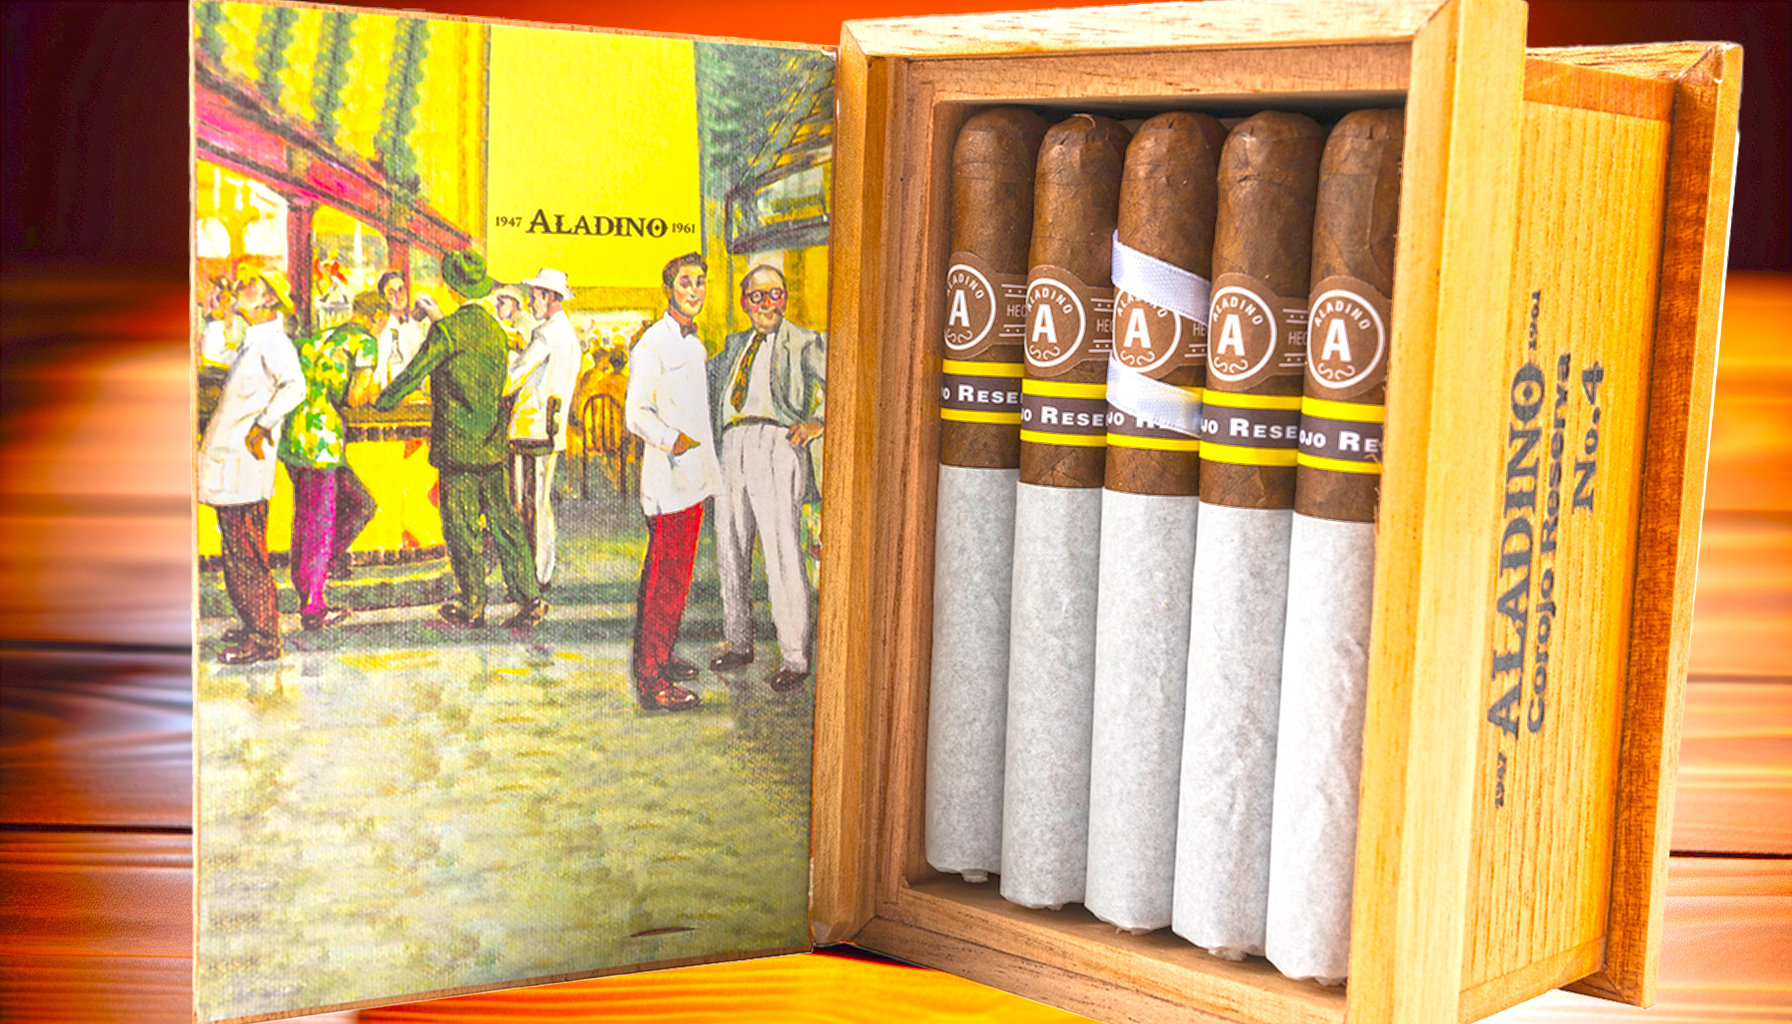 Unboxing experience of Aladino Corojo Reserva cigar